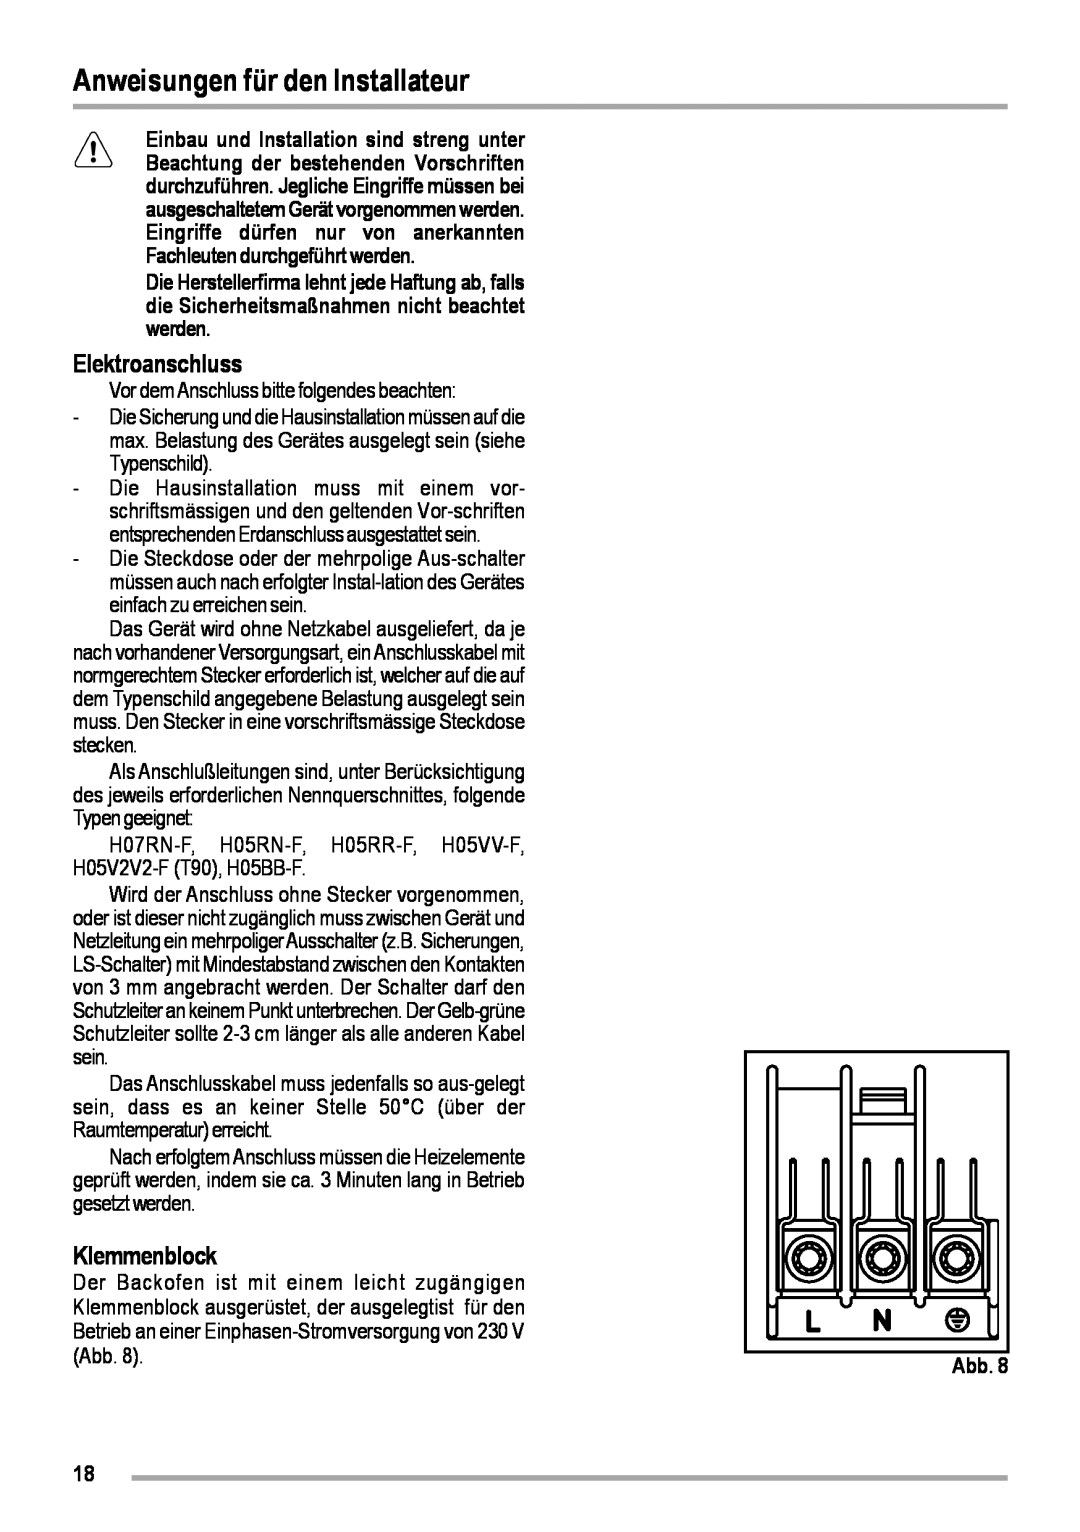 Zanussi ZOB 460 manual Anweisungen für den Installateur, Elektroanschluss, Klemmenblock 